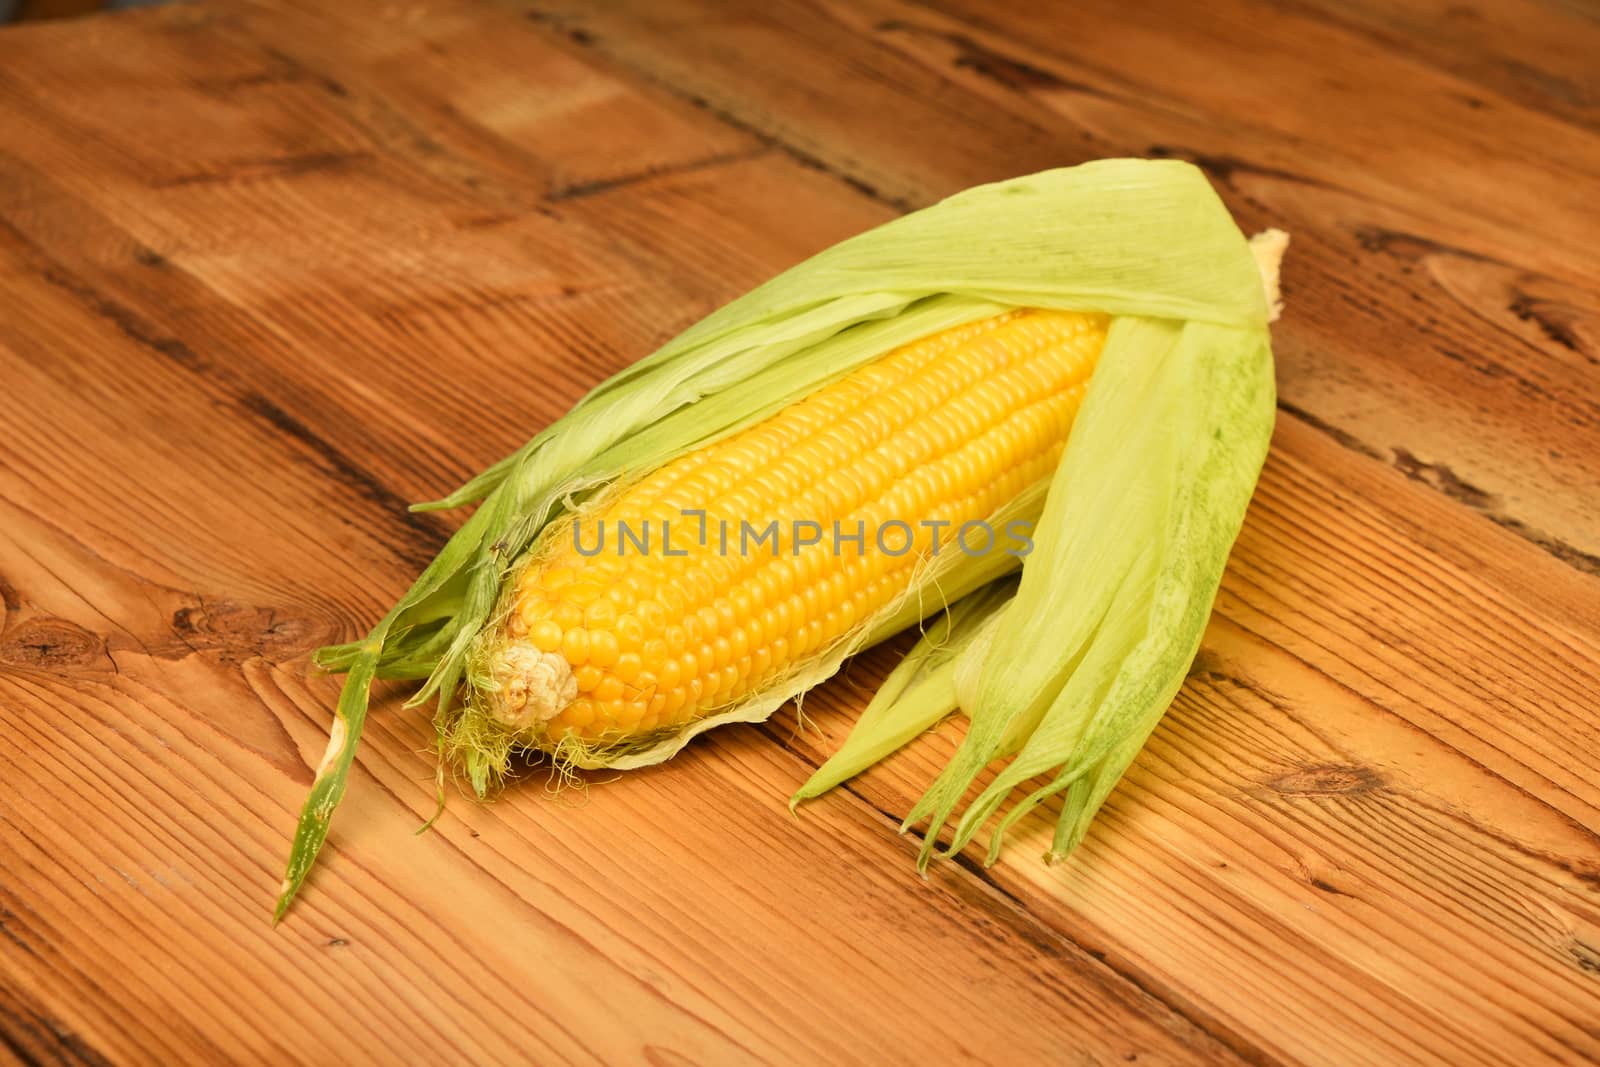 One open corn cob on vintage wooden surface by BreakingTheWalls